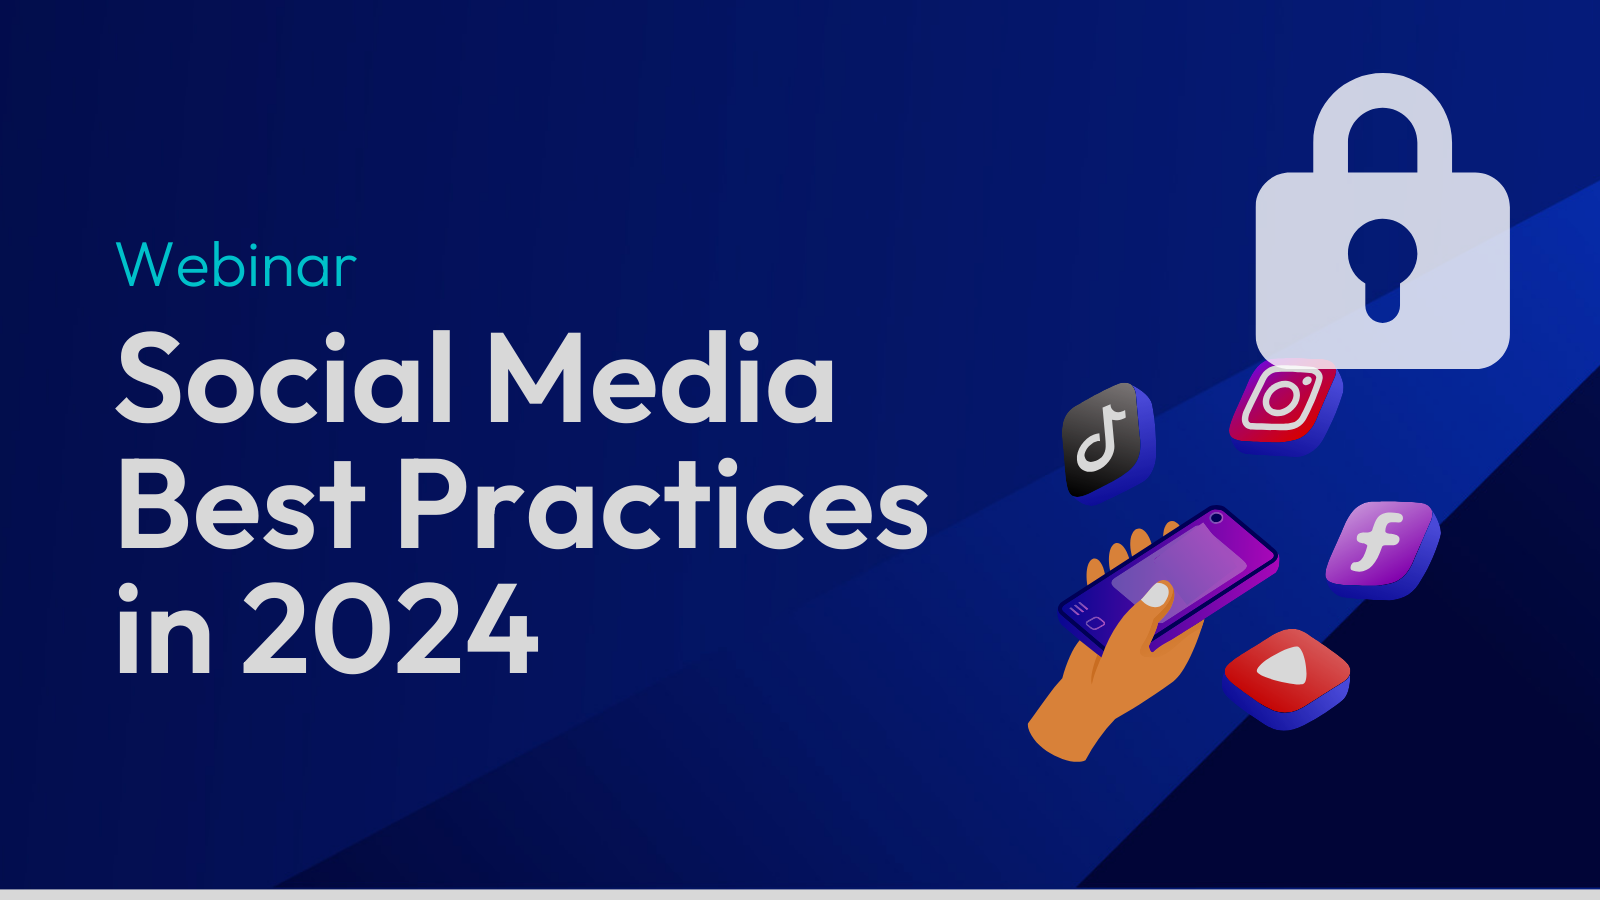 Webinar: Social Media Best Practices